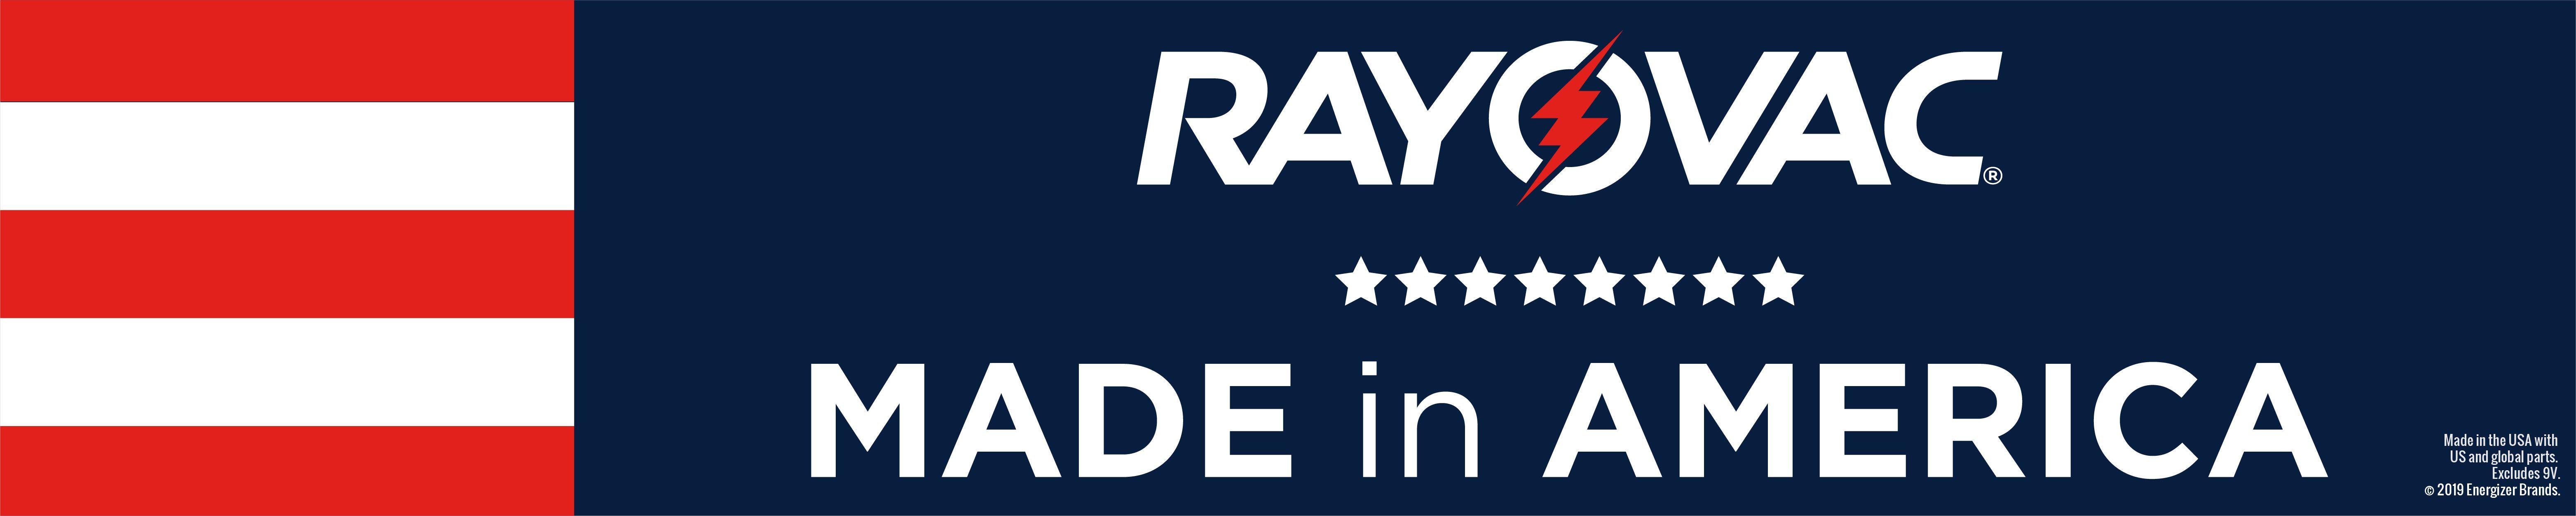 Rayovac Logo - Amazon.com: Rayovac